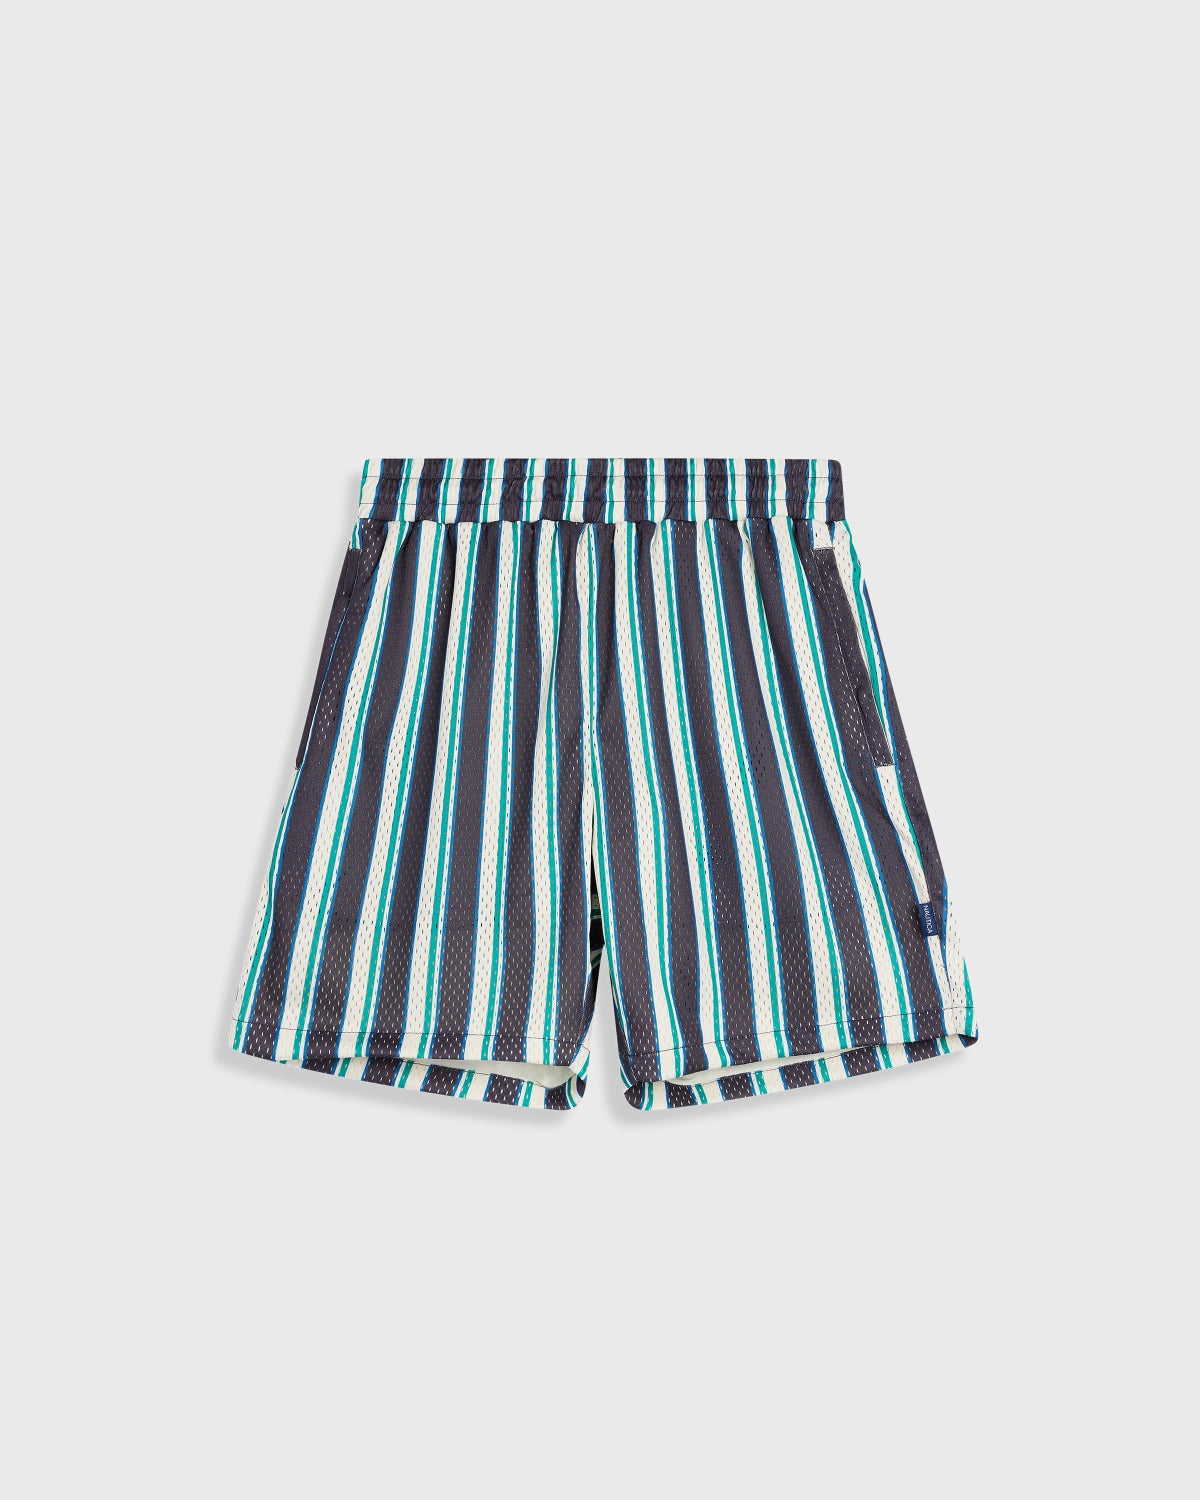 KROST x Nautica | Striped Mesh Shorts